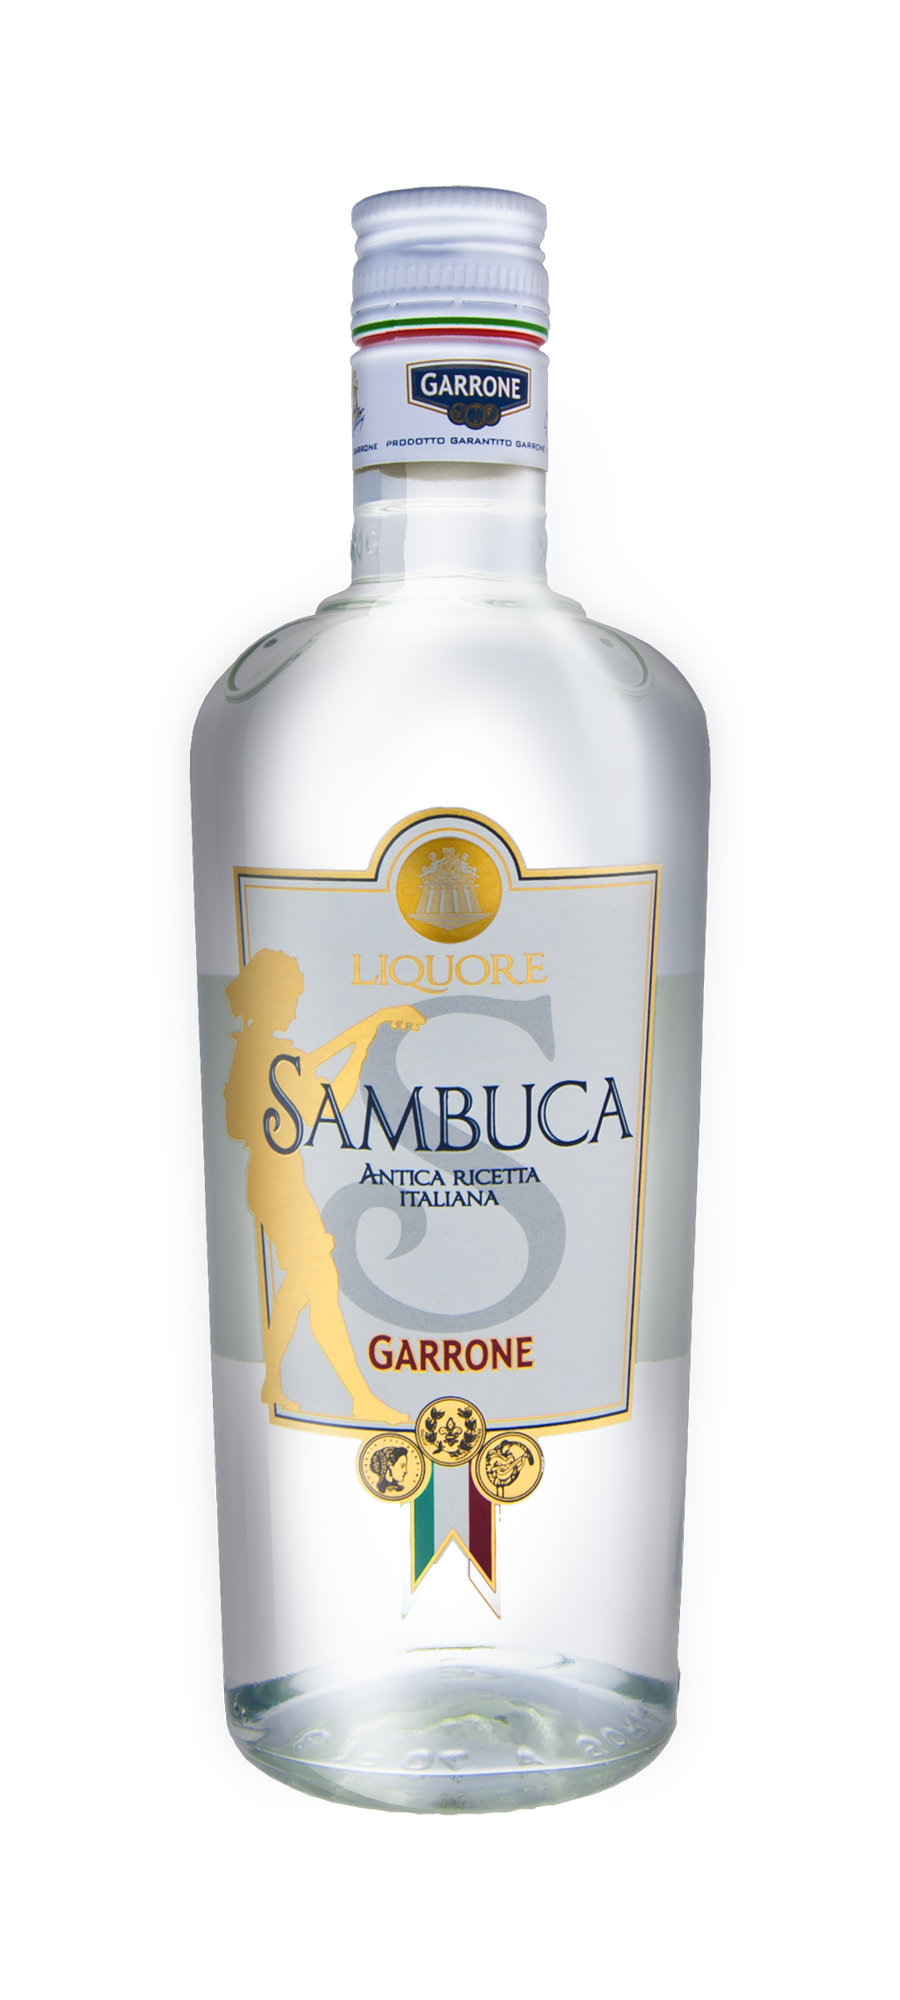 Italian Liquors | Limoncello, Sambuca, Spritz and much more | Garrone Italy